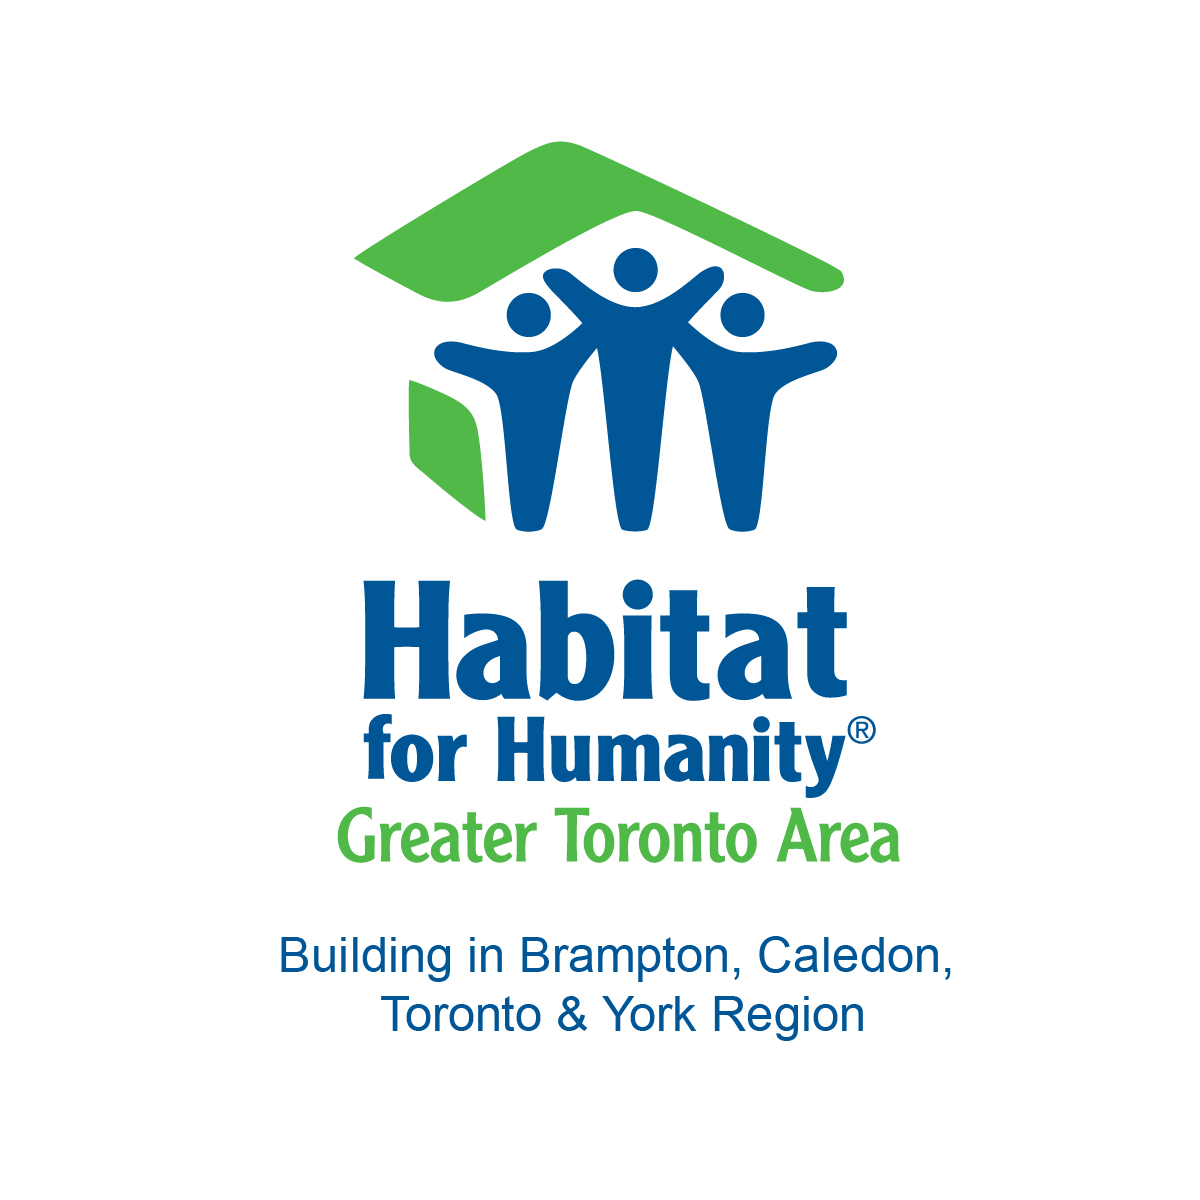  Habitat for Humanity Greater Toronto Area